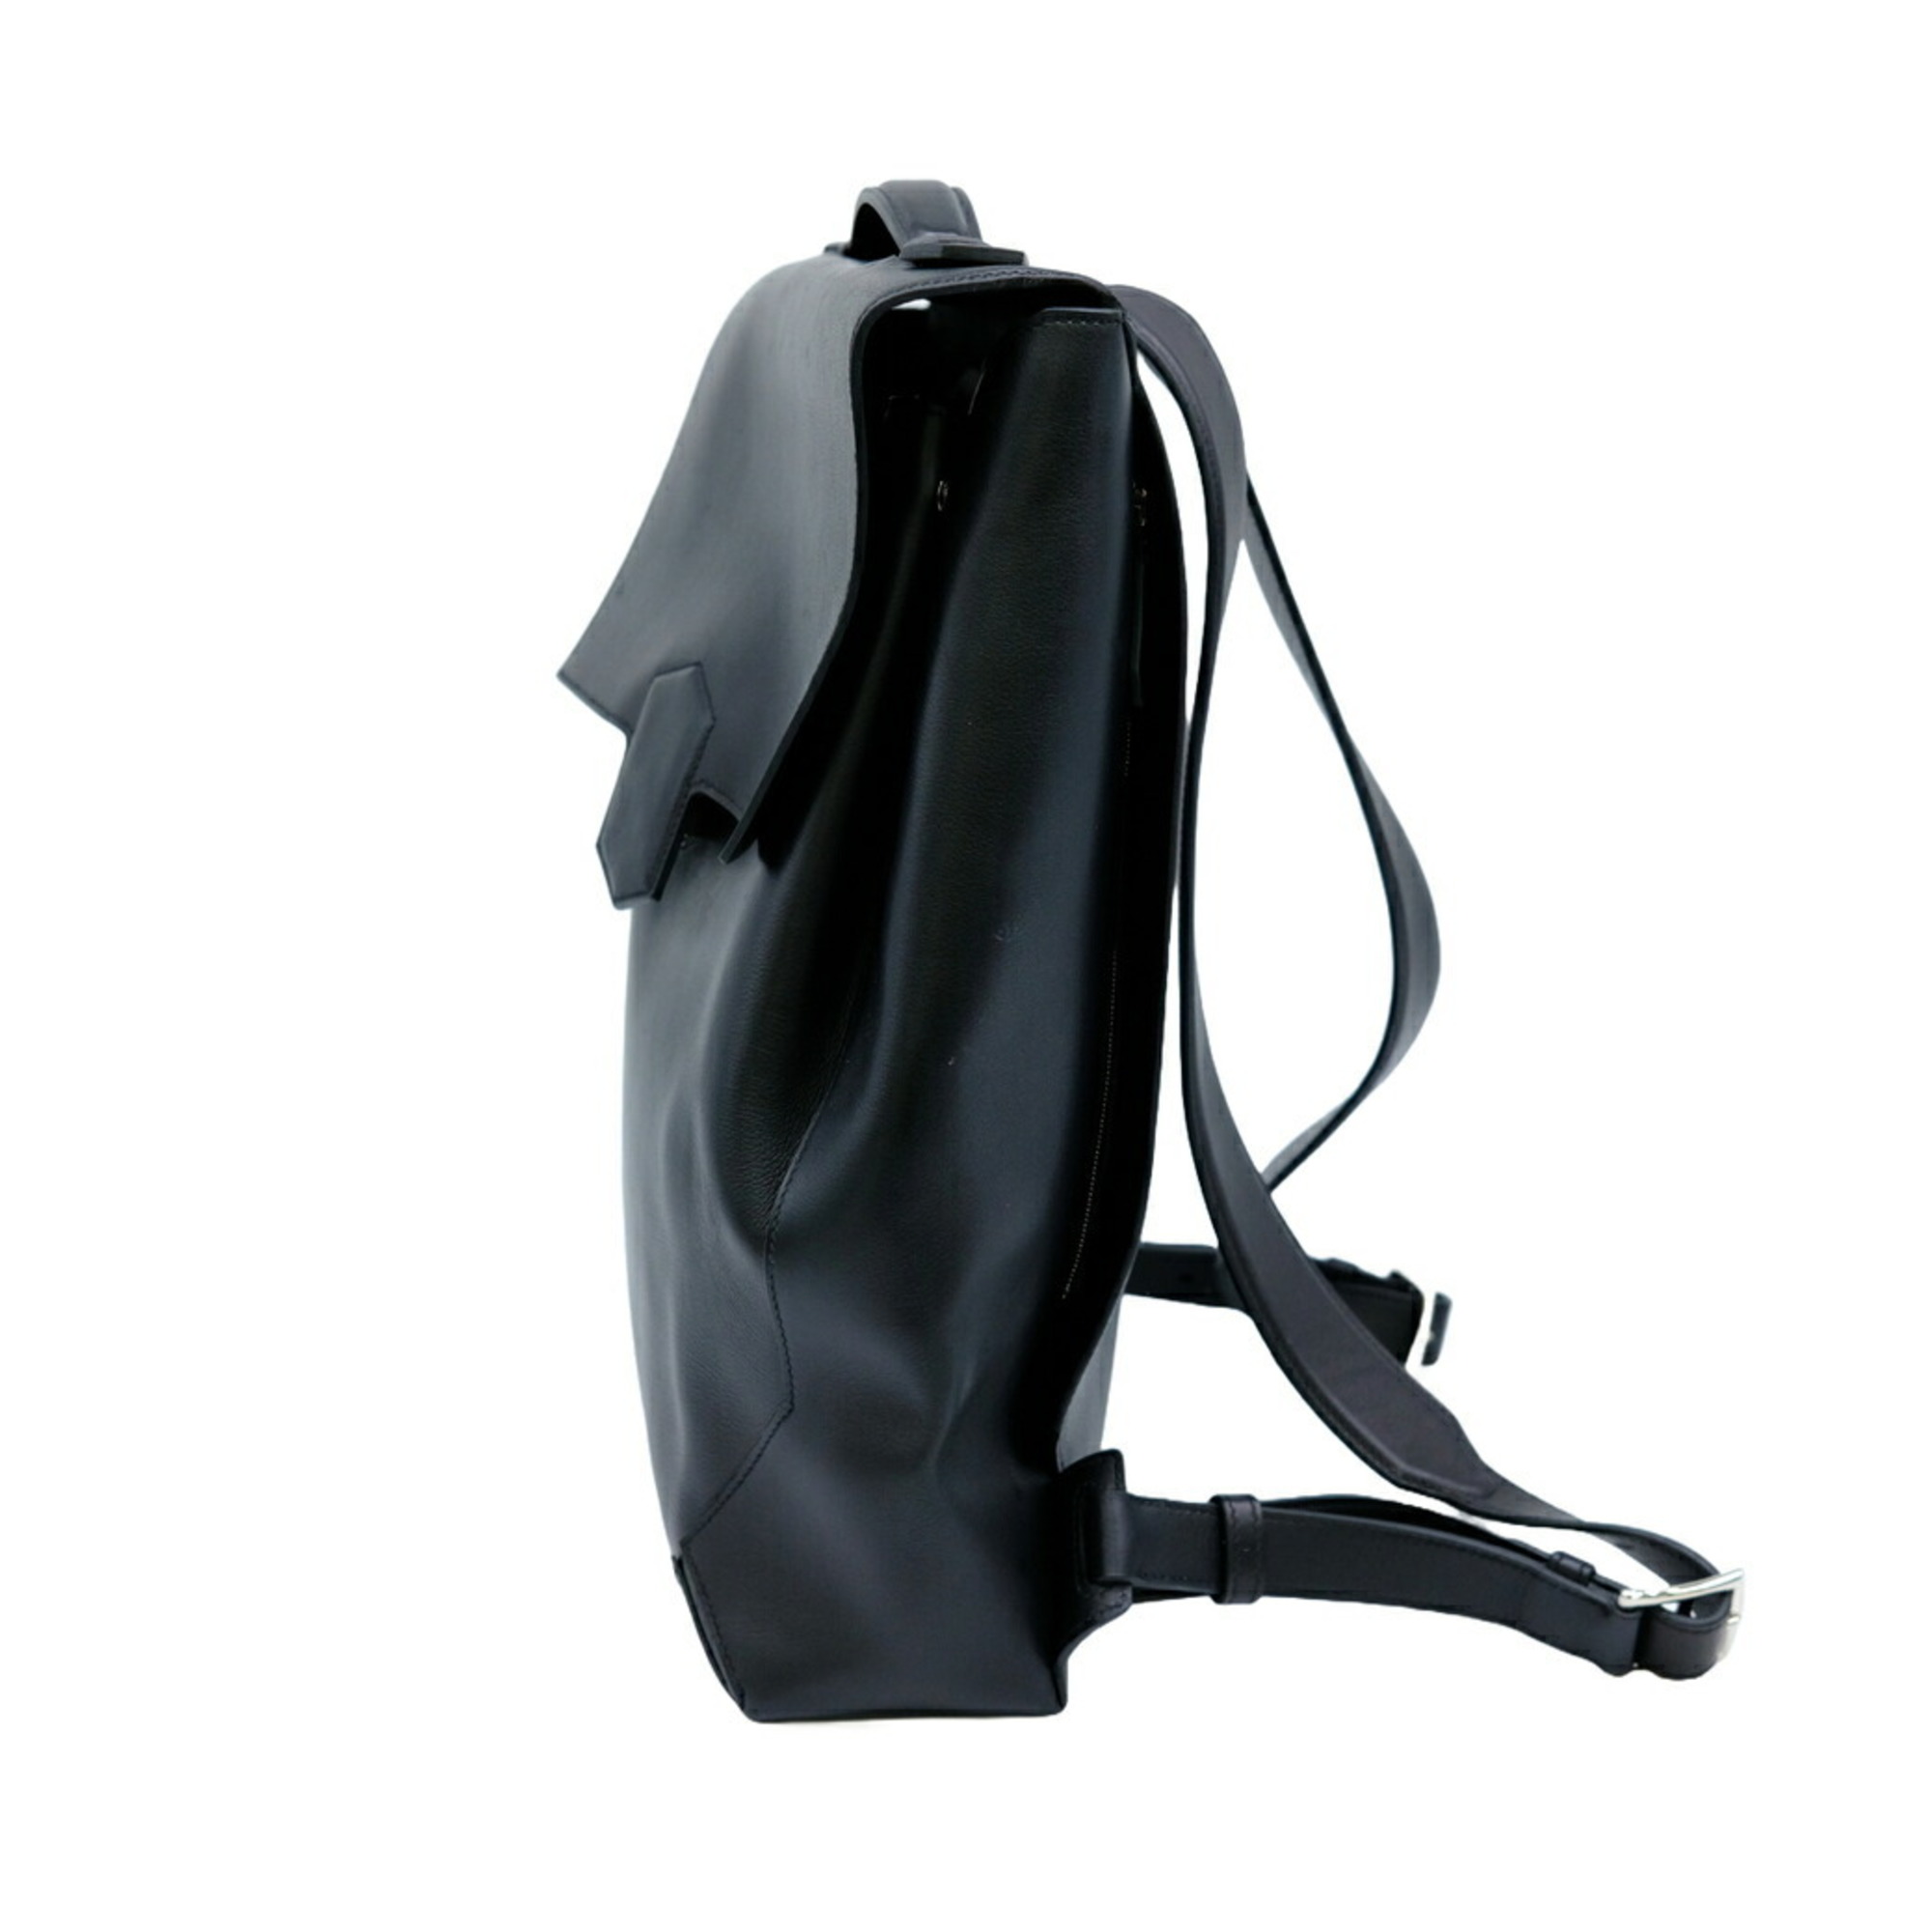 HERMES Backpack Flash Evergrain Leather Black